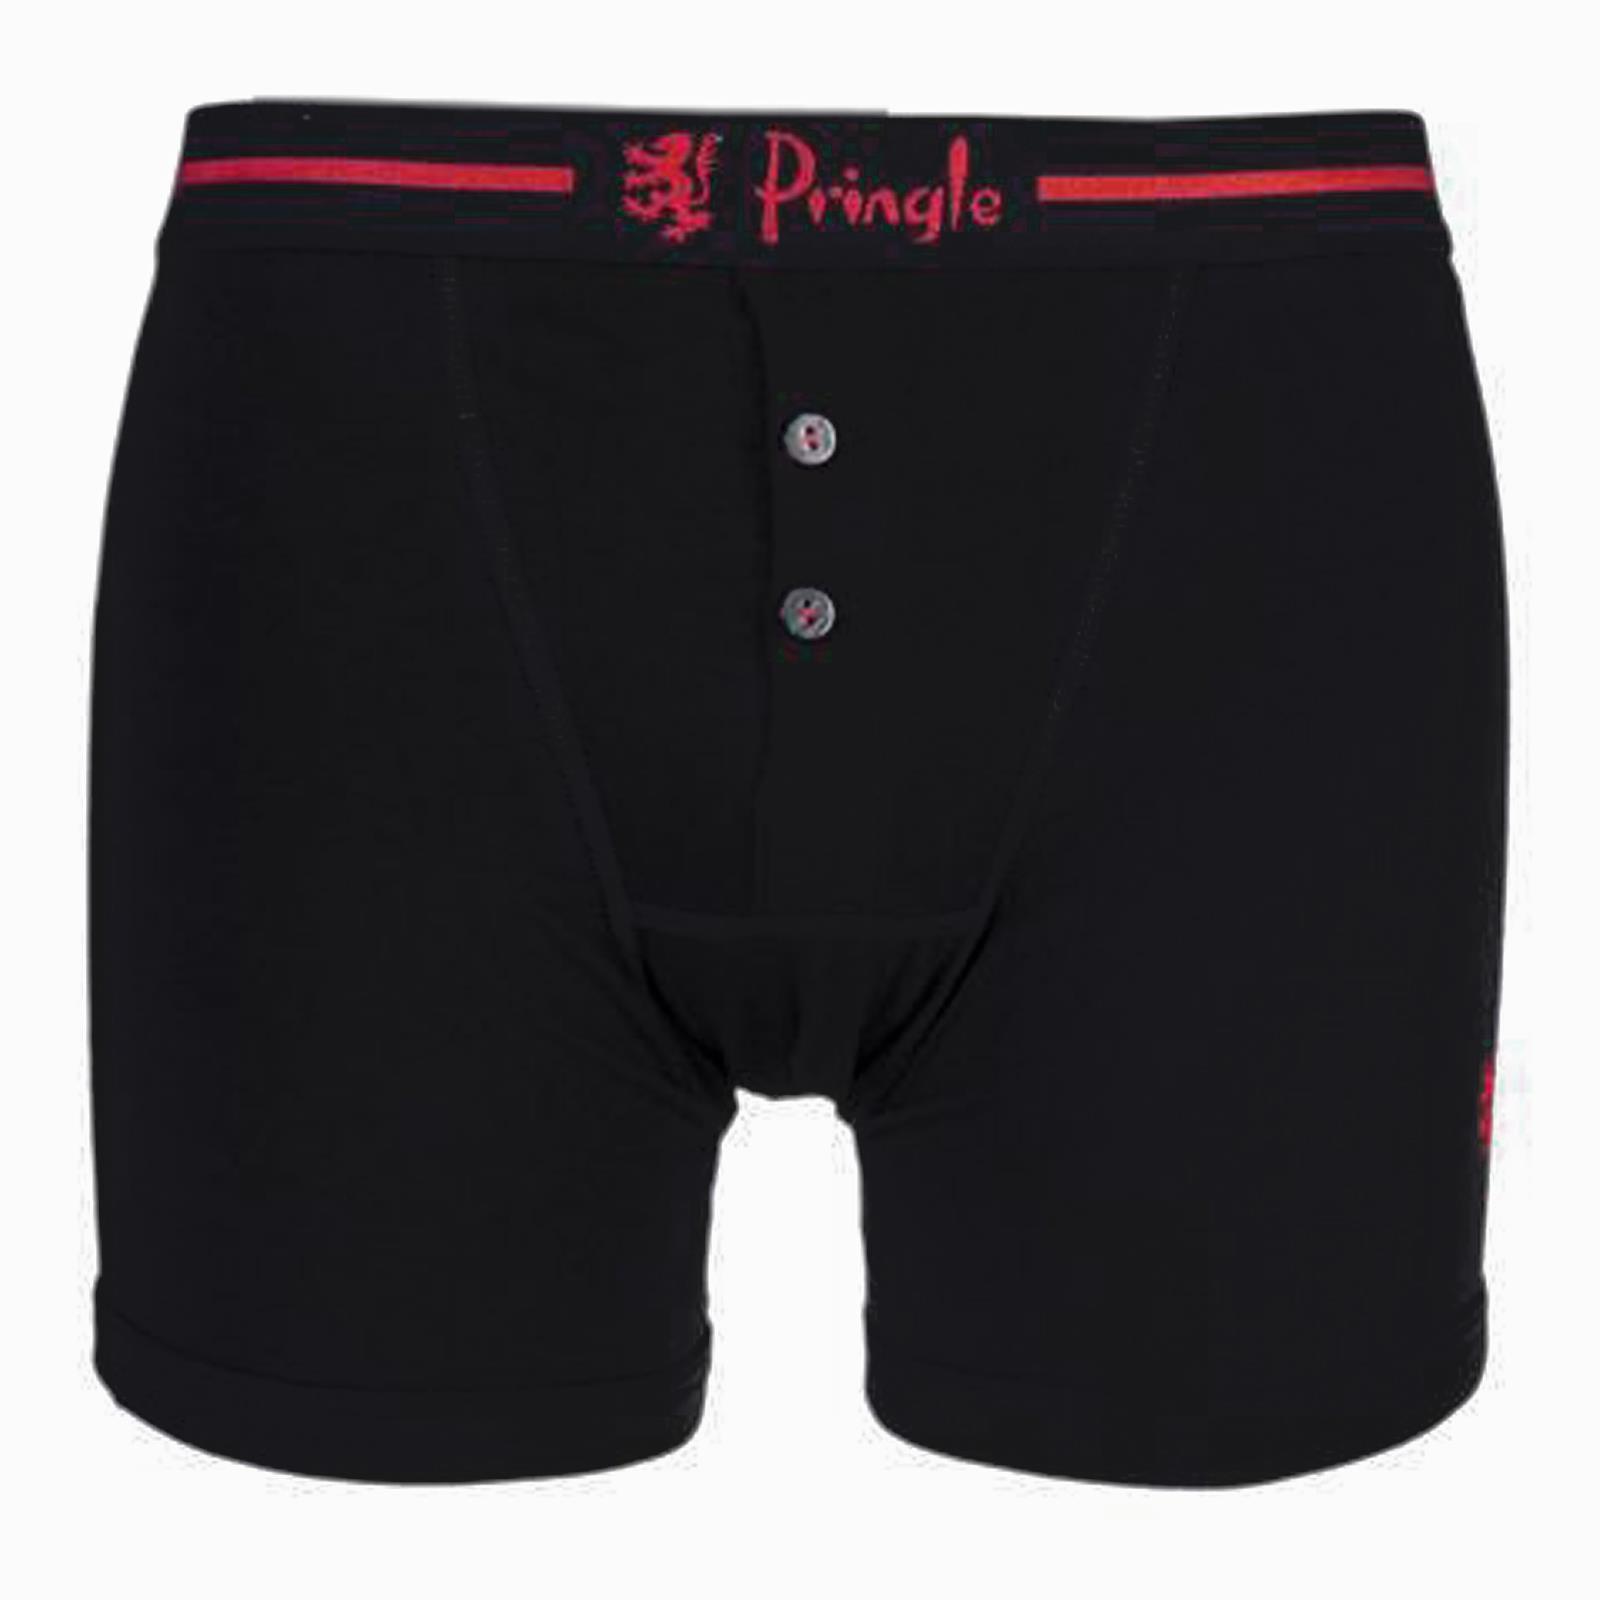 Pringle Classic Boxers Shorts Pack of 4 Cotton Mens Underwear Black White M L XL 